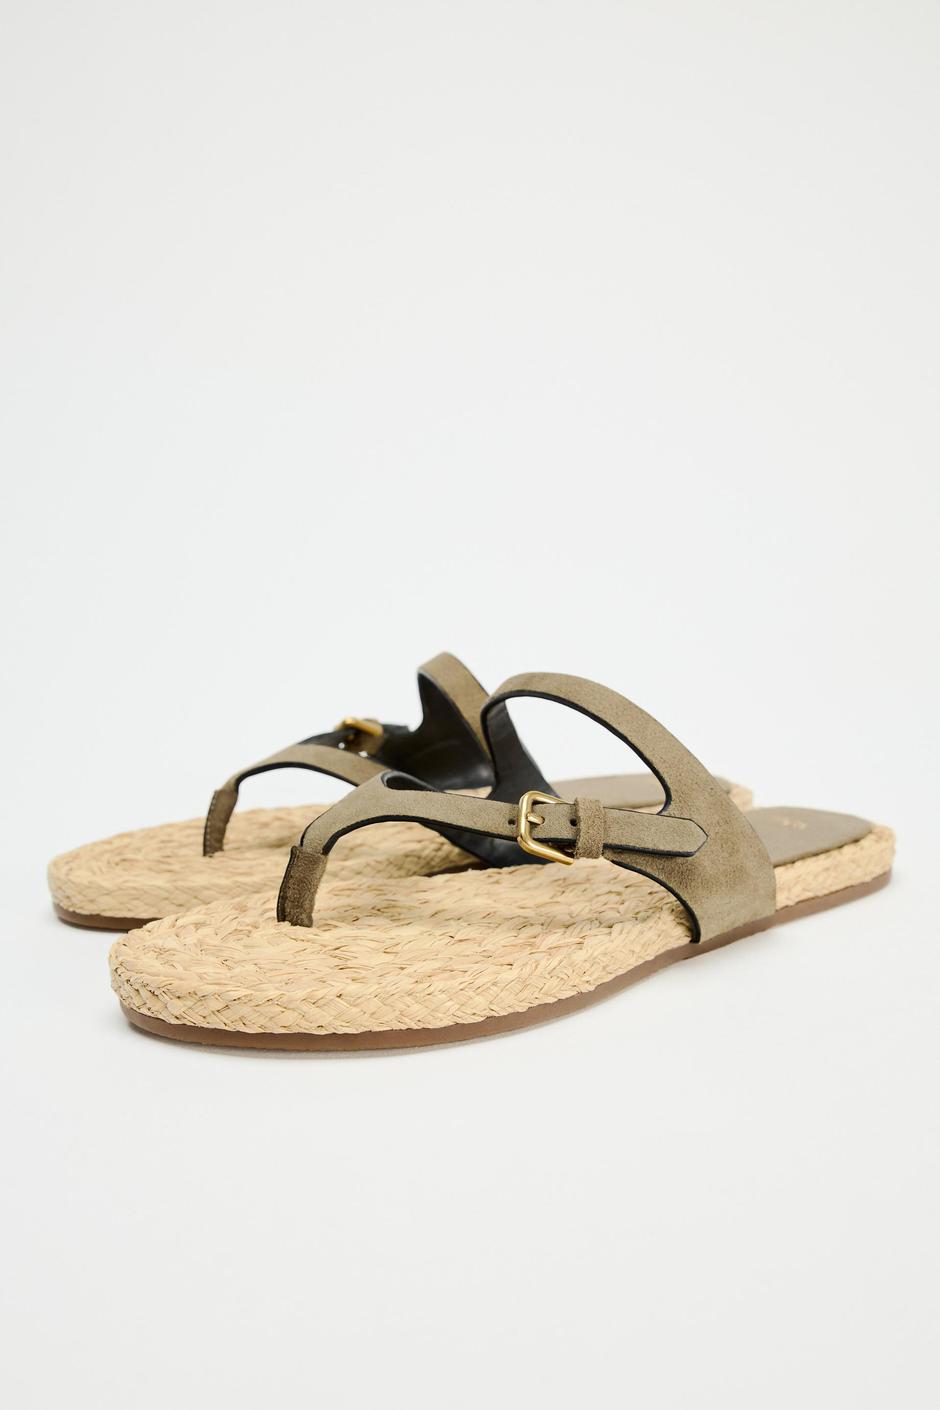 Foto: Zara, sandale u stilu japanki (45,95 eura) | Autor: 